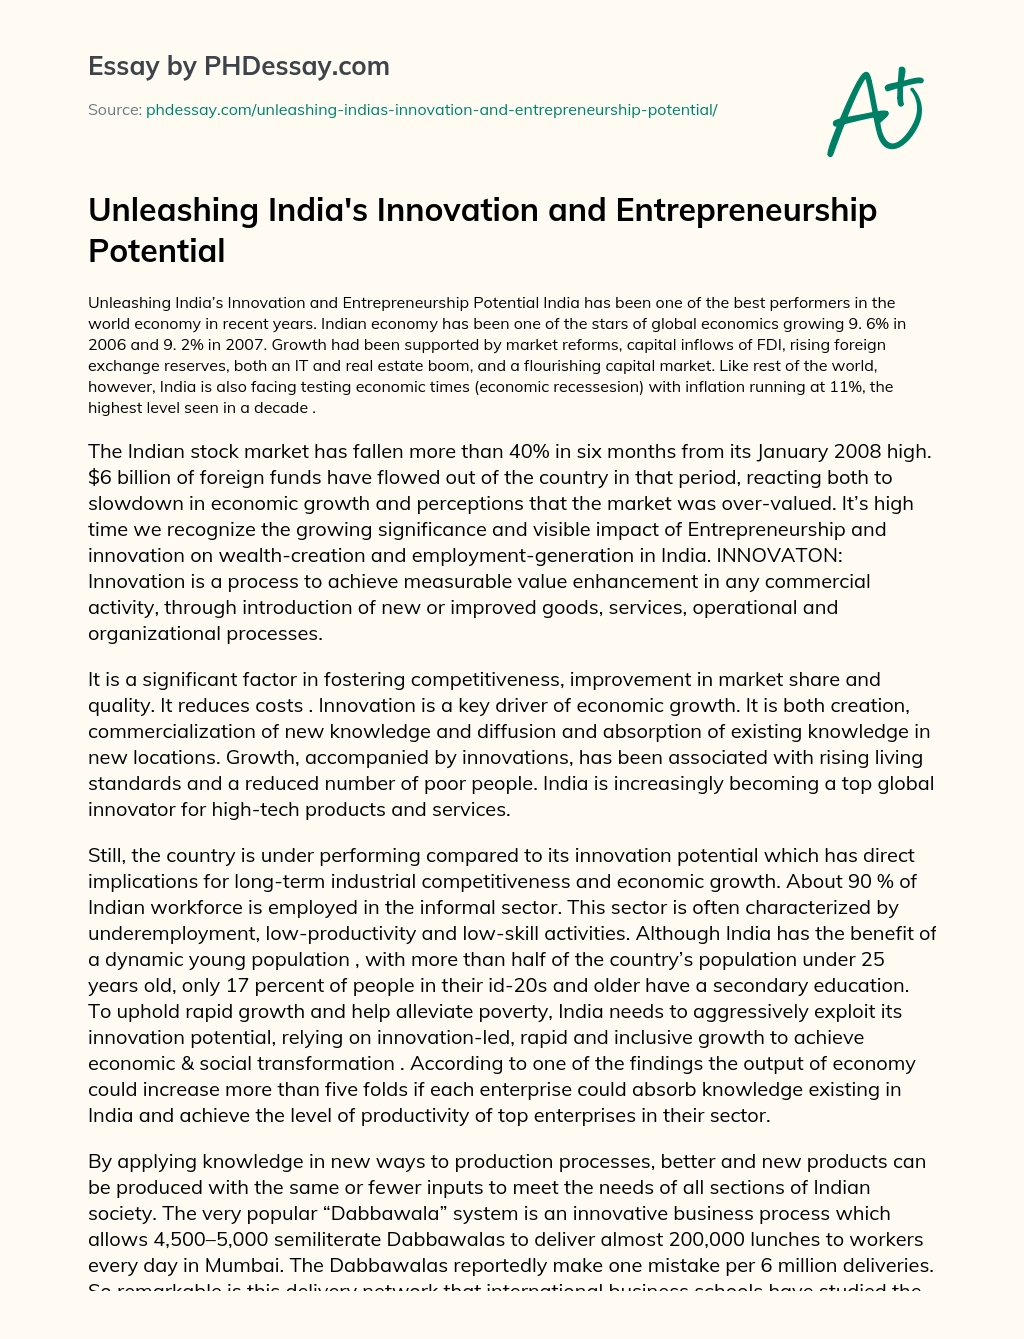 Unleashing India’s Innovation and Entrepreneurship Potential essay